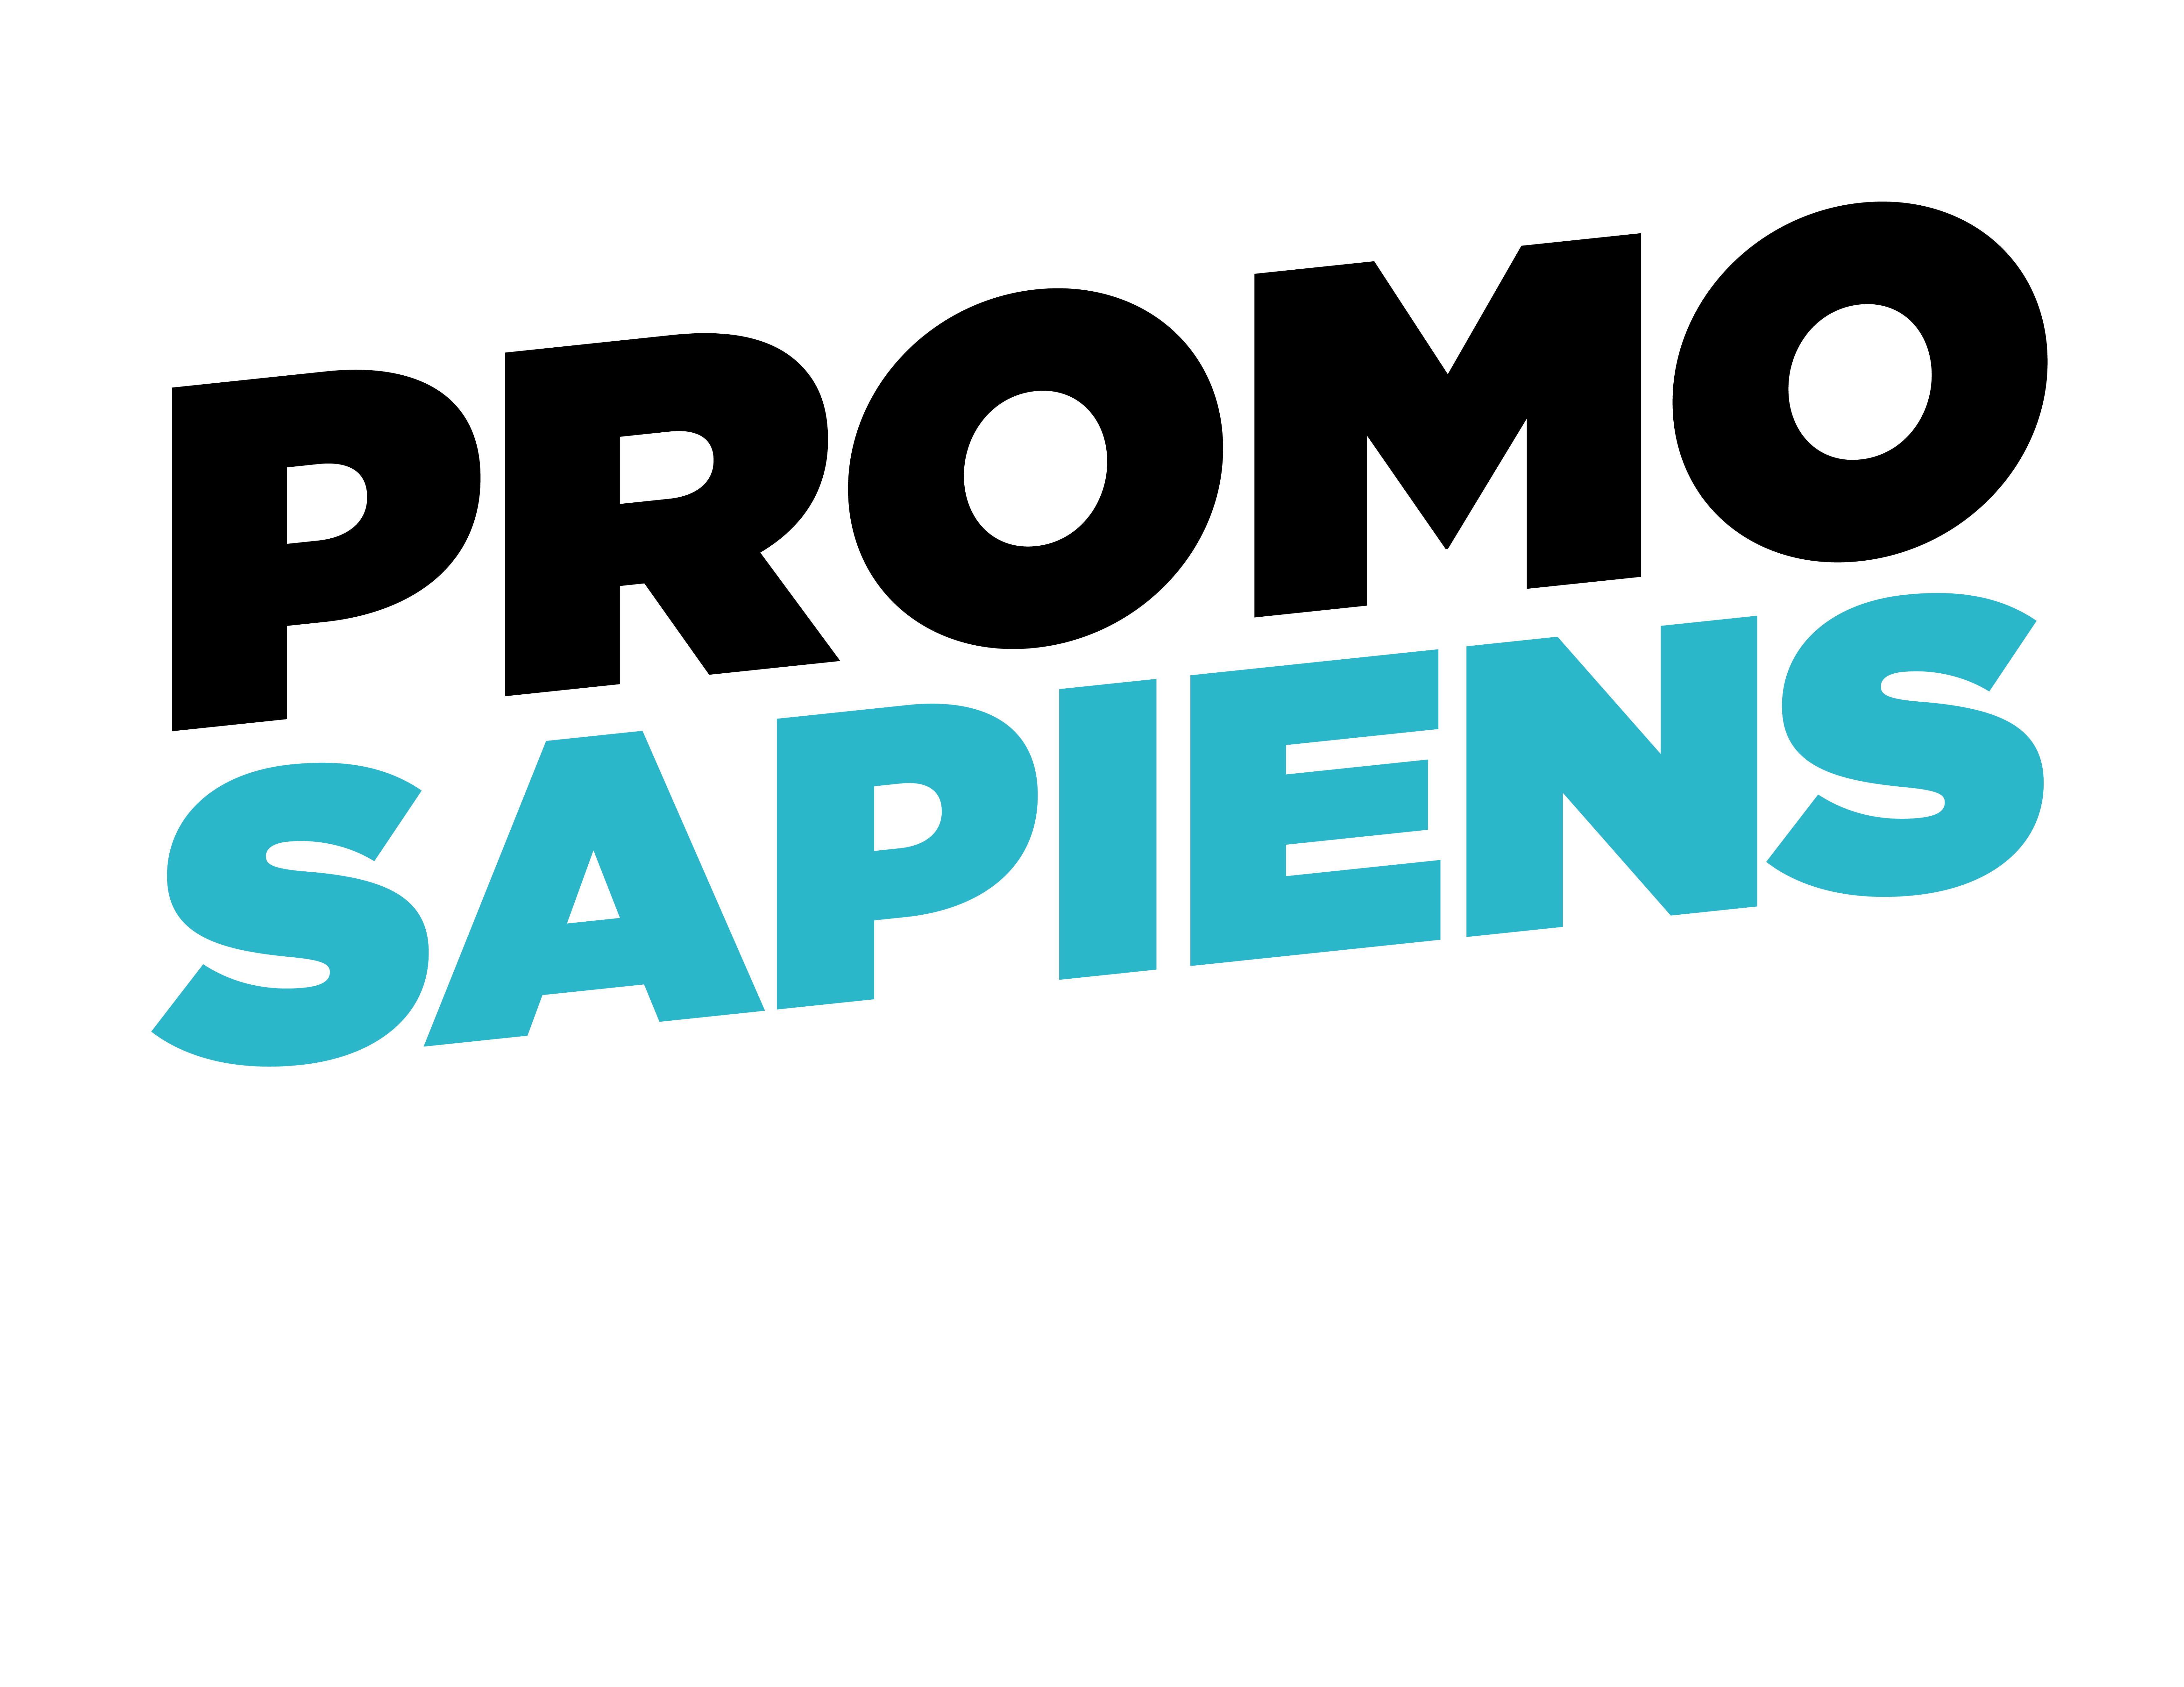 Promo Sapiens